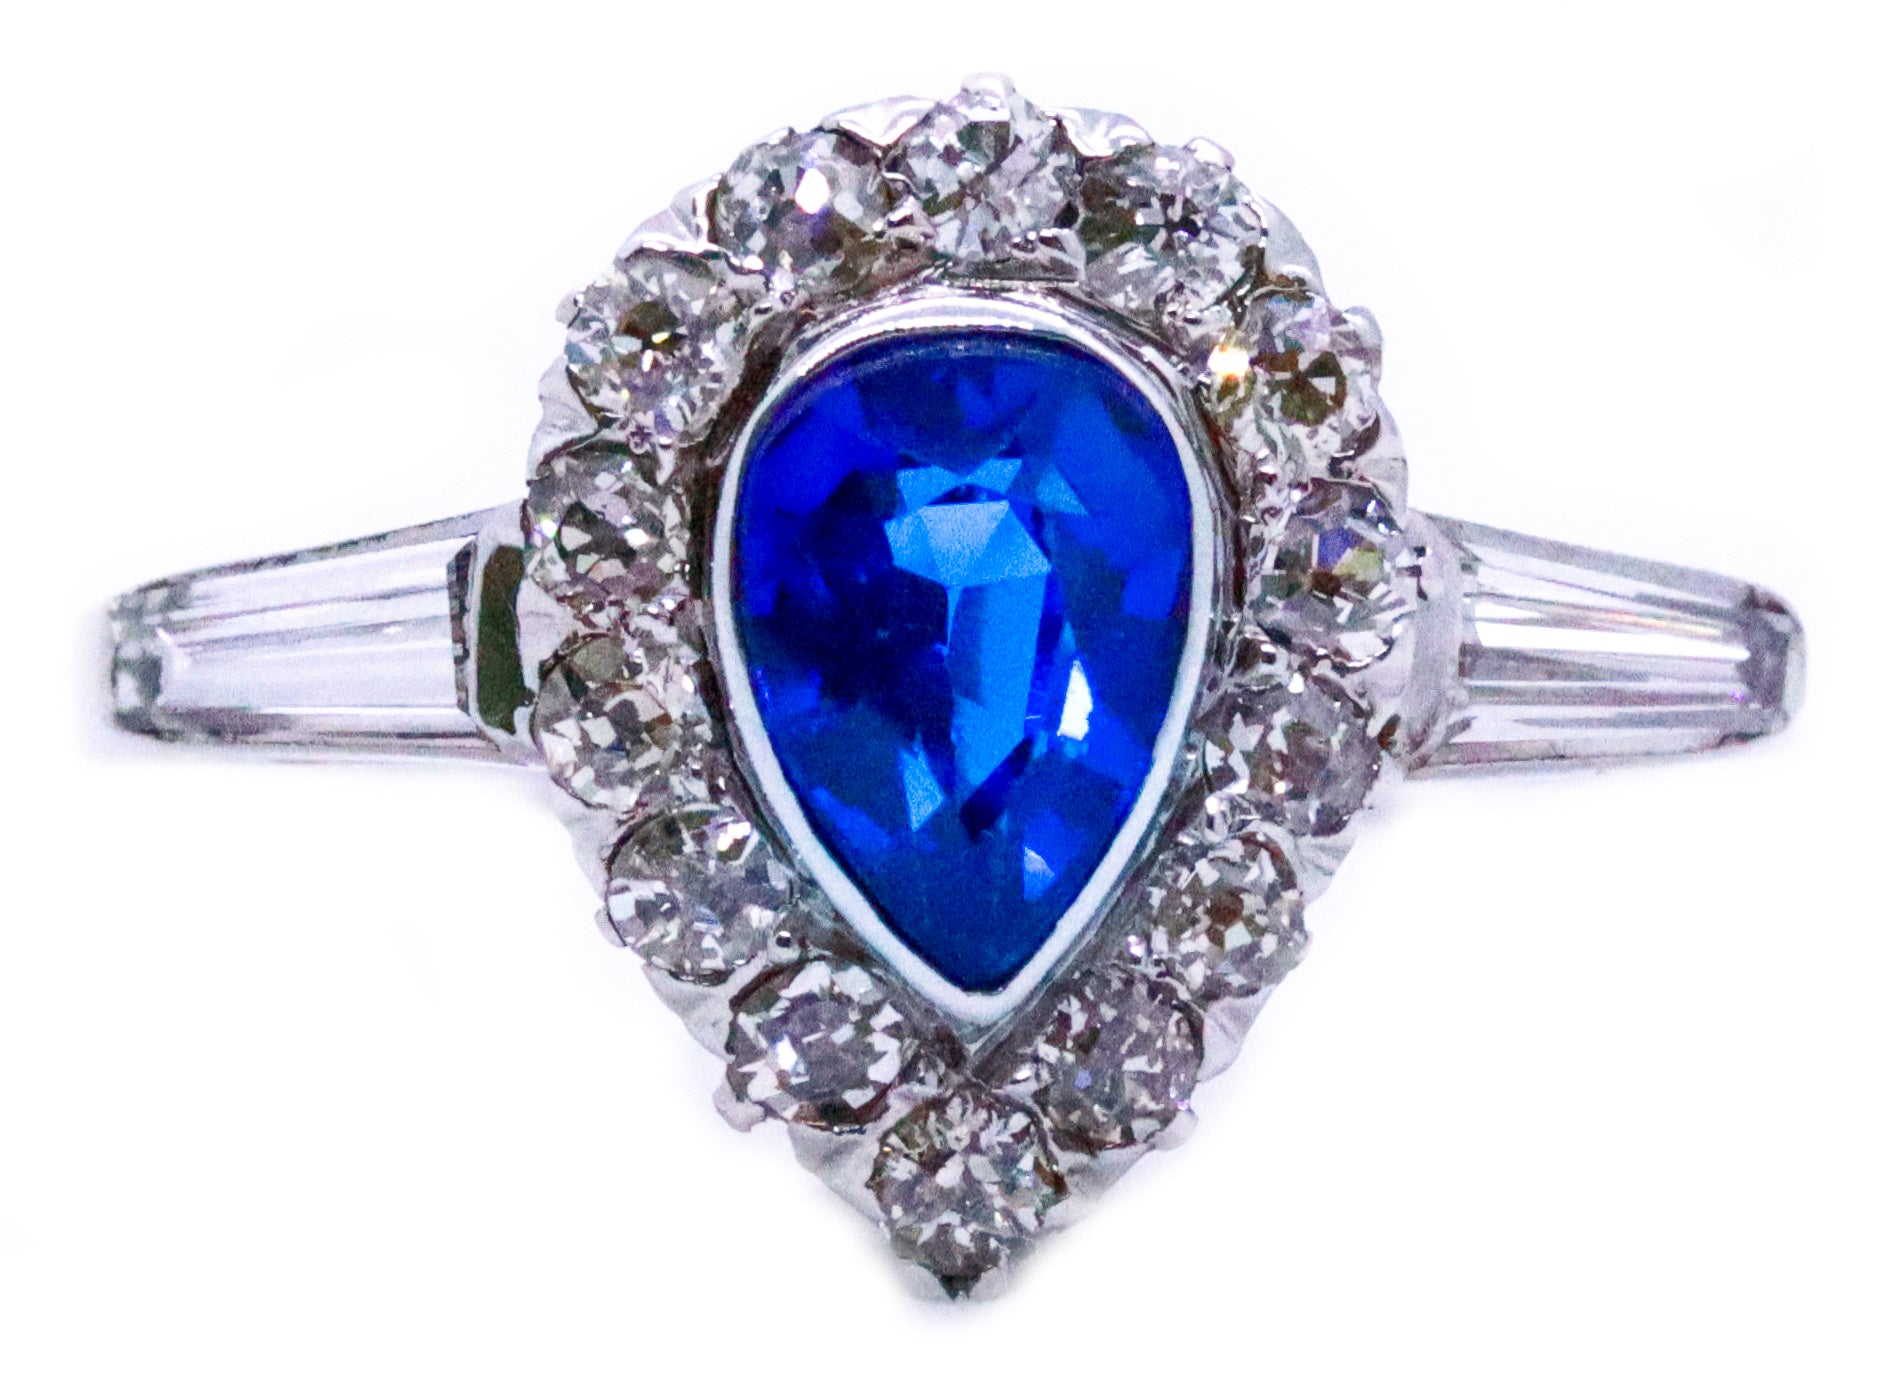 PLATINUM ART DECO 1940 RING WITH BLUE SAPPHIRE & DIAMONDS